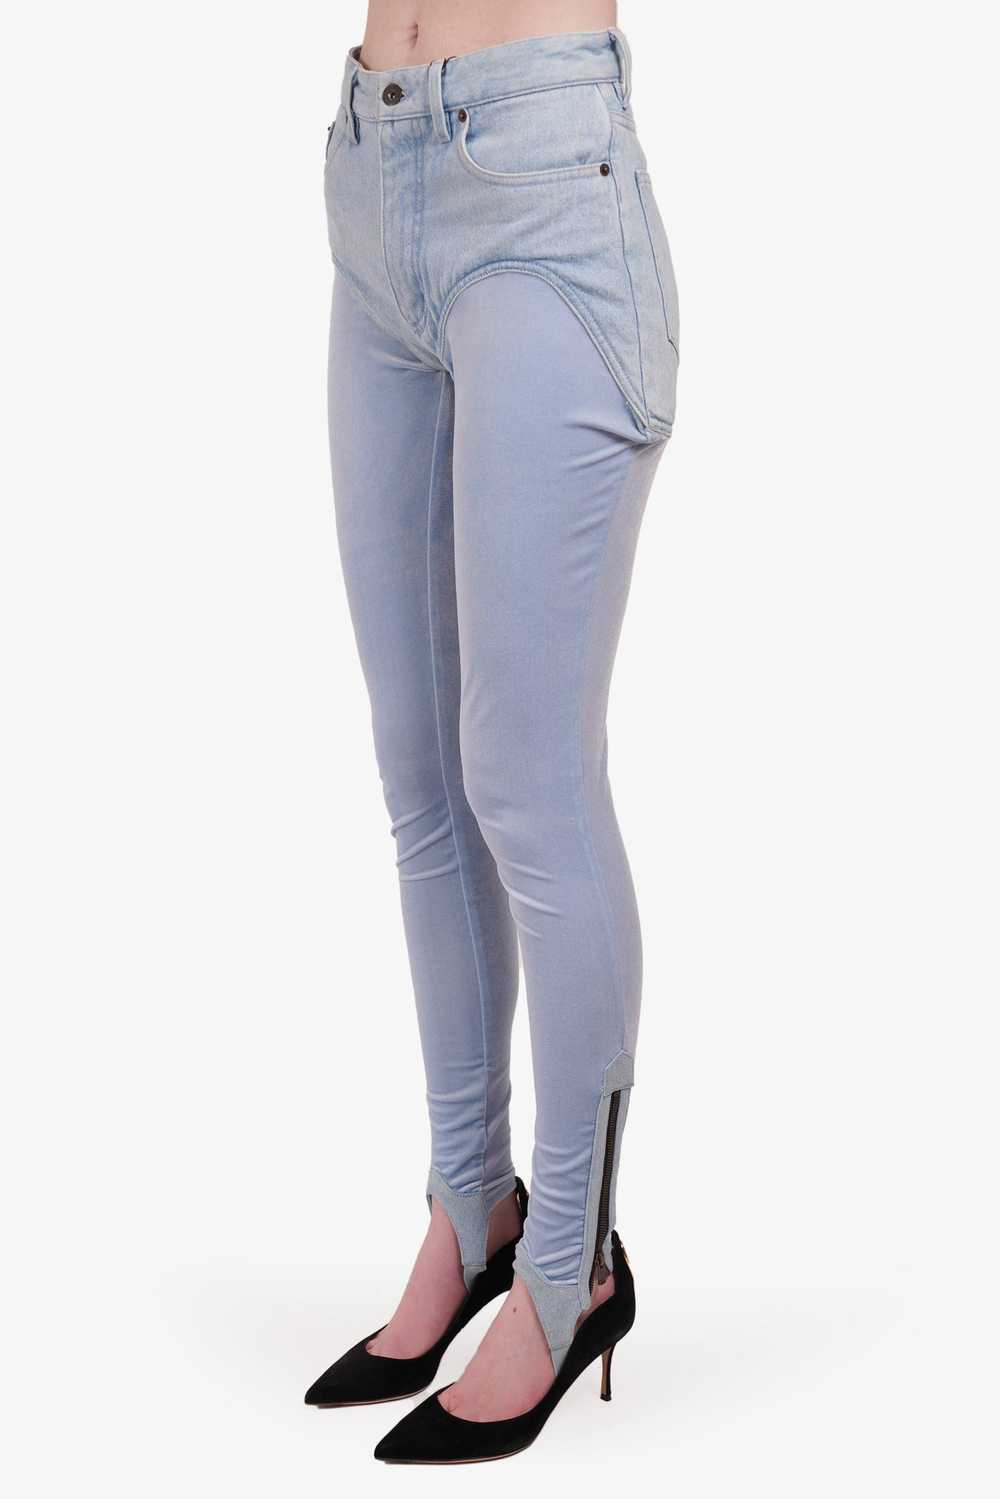 Y Project Blue Denim/Velvet Stirrup Pants Size S - image 2